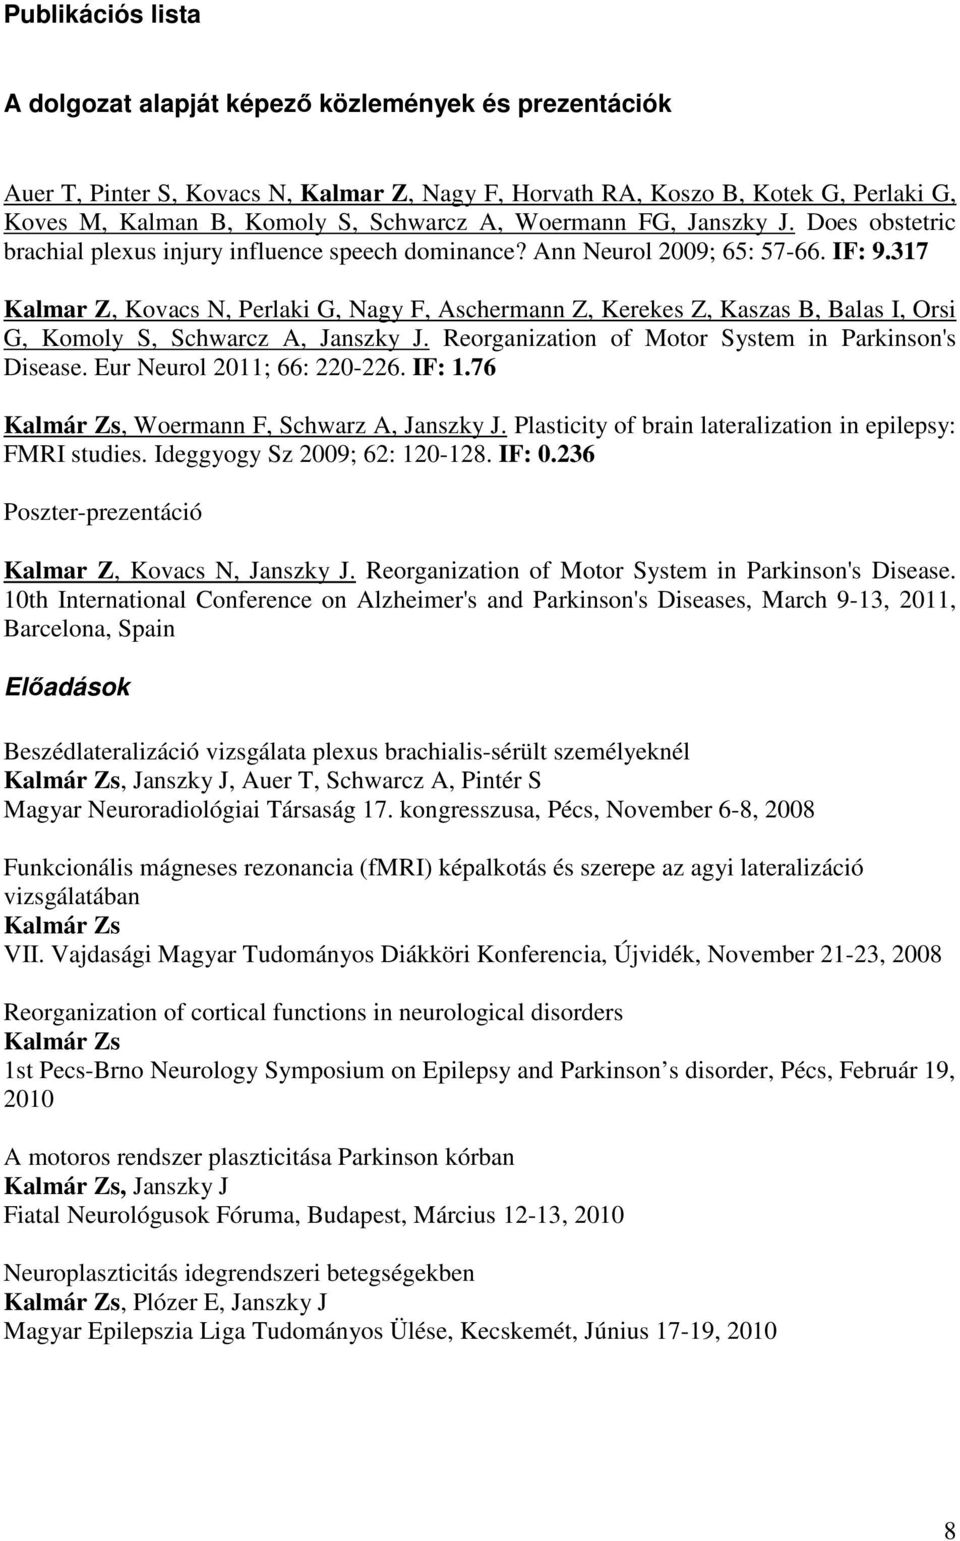 317 Kalmar Z, Kovacs N, Perlaki G, Nagy F, Aschermann Z, Kerekes Z, Kaszas B, Balas I, Orsi G, Komoly S, Schwarcz A, Janszky J. Reorganization of Motor System in Parkinson's Disease.